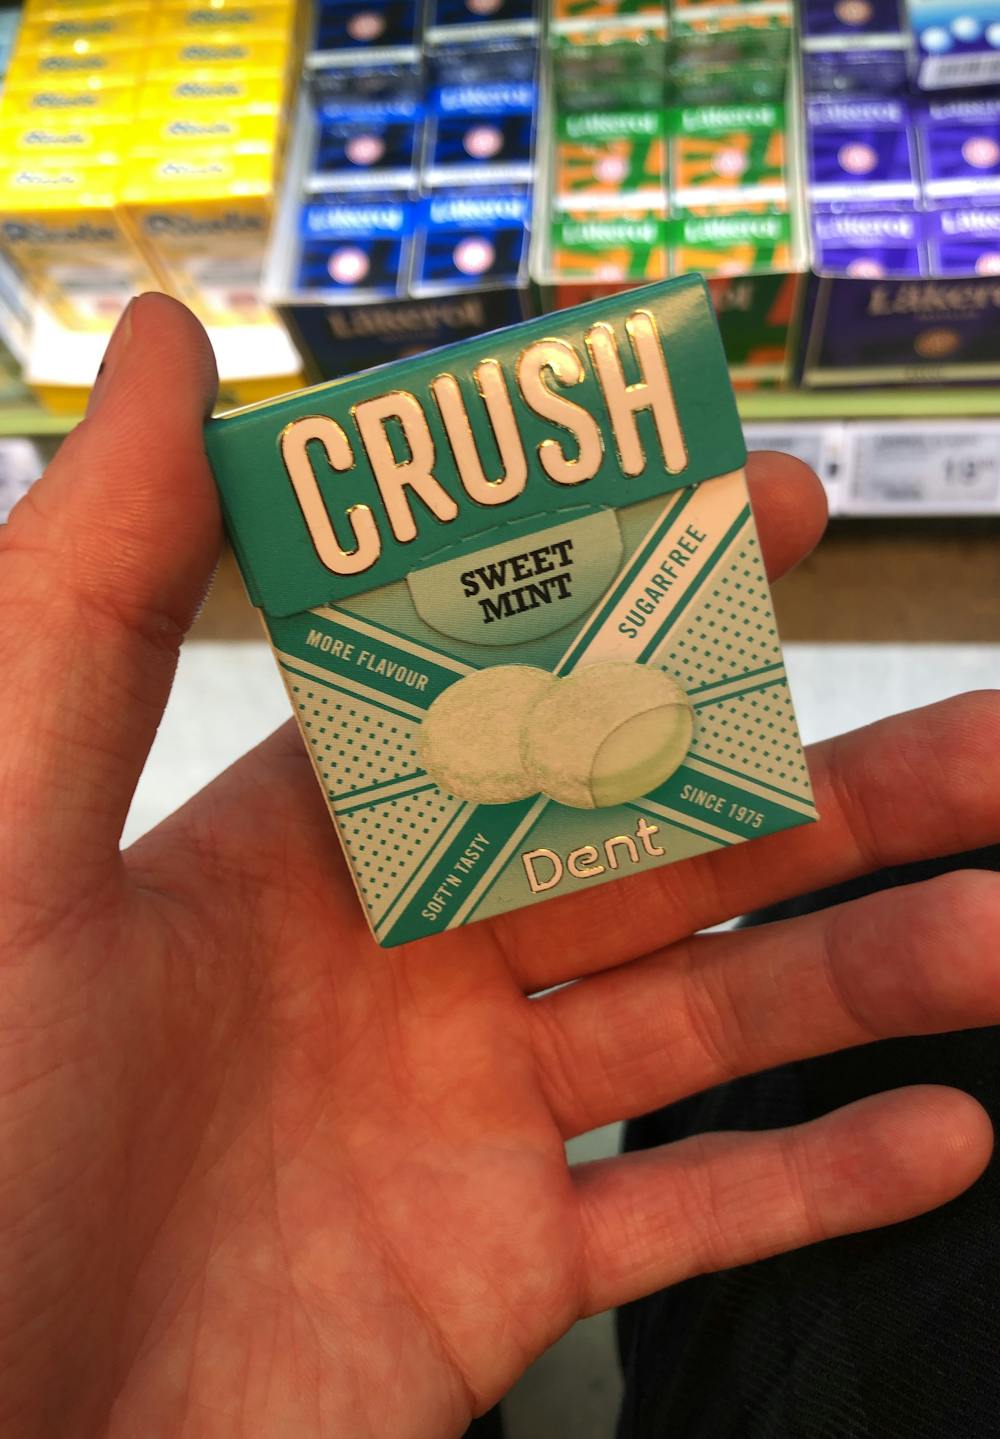 Crush sweet mint, Dent